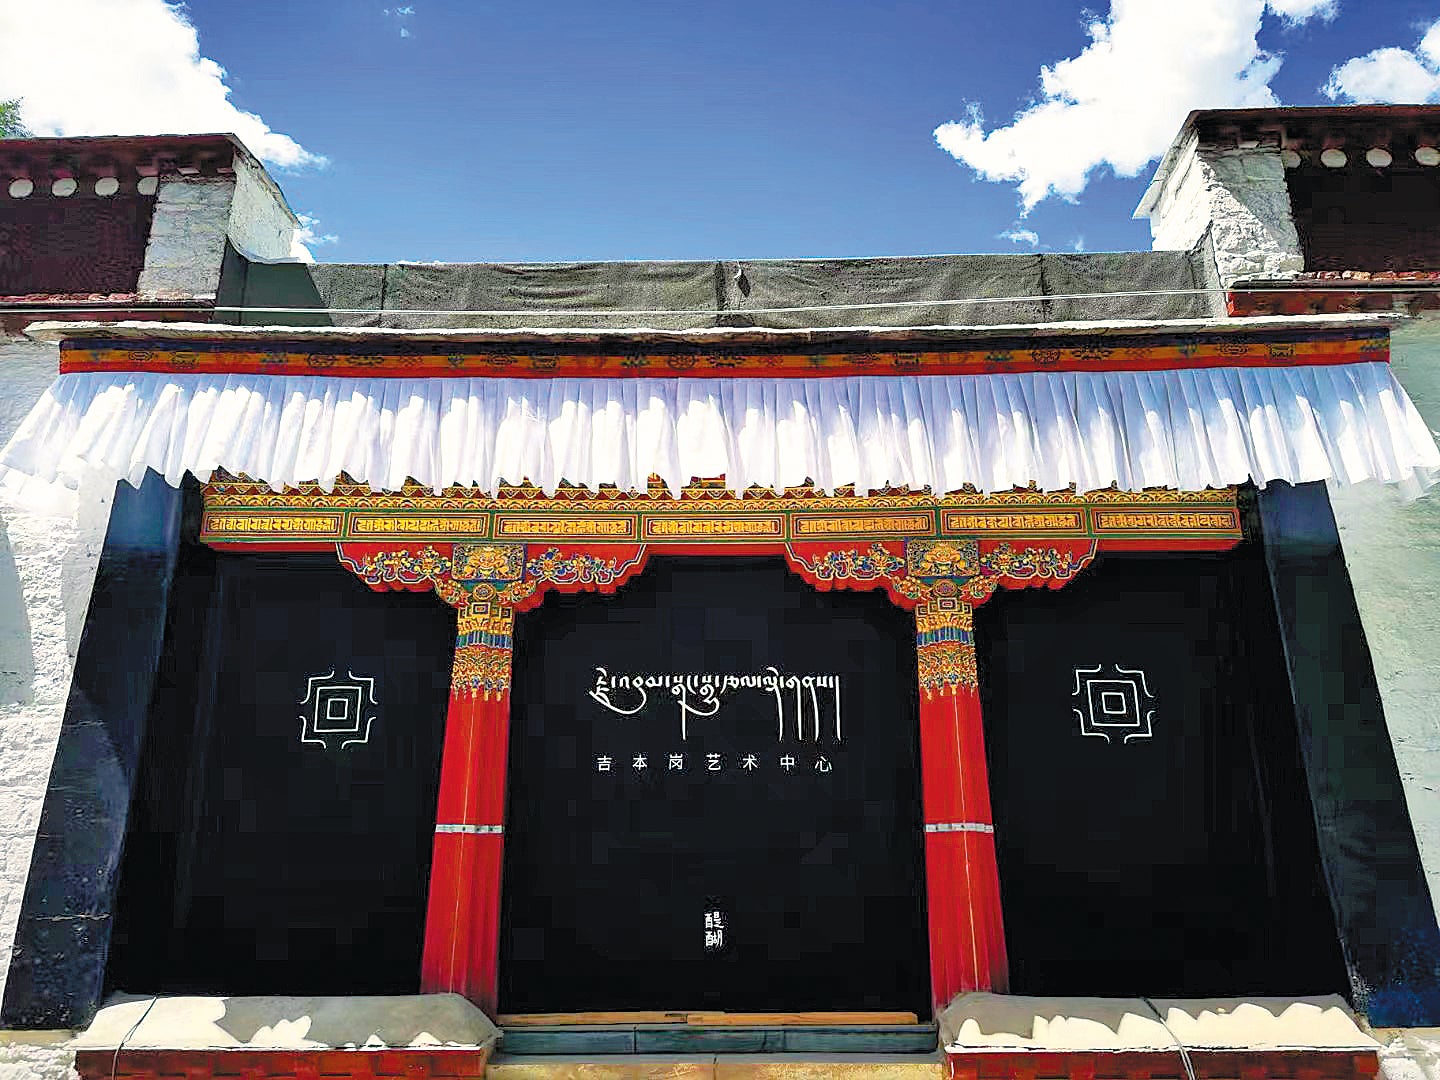 The Jebum-gang Lha-khang temple in Lhasa, Tibet autonomous region, has been transformed into a modern art centre